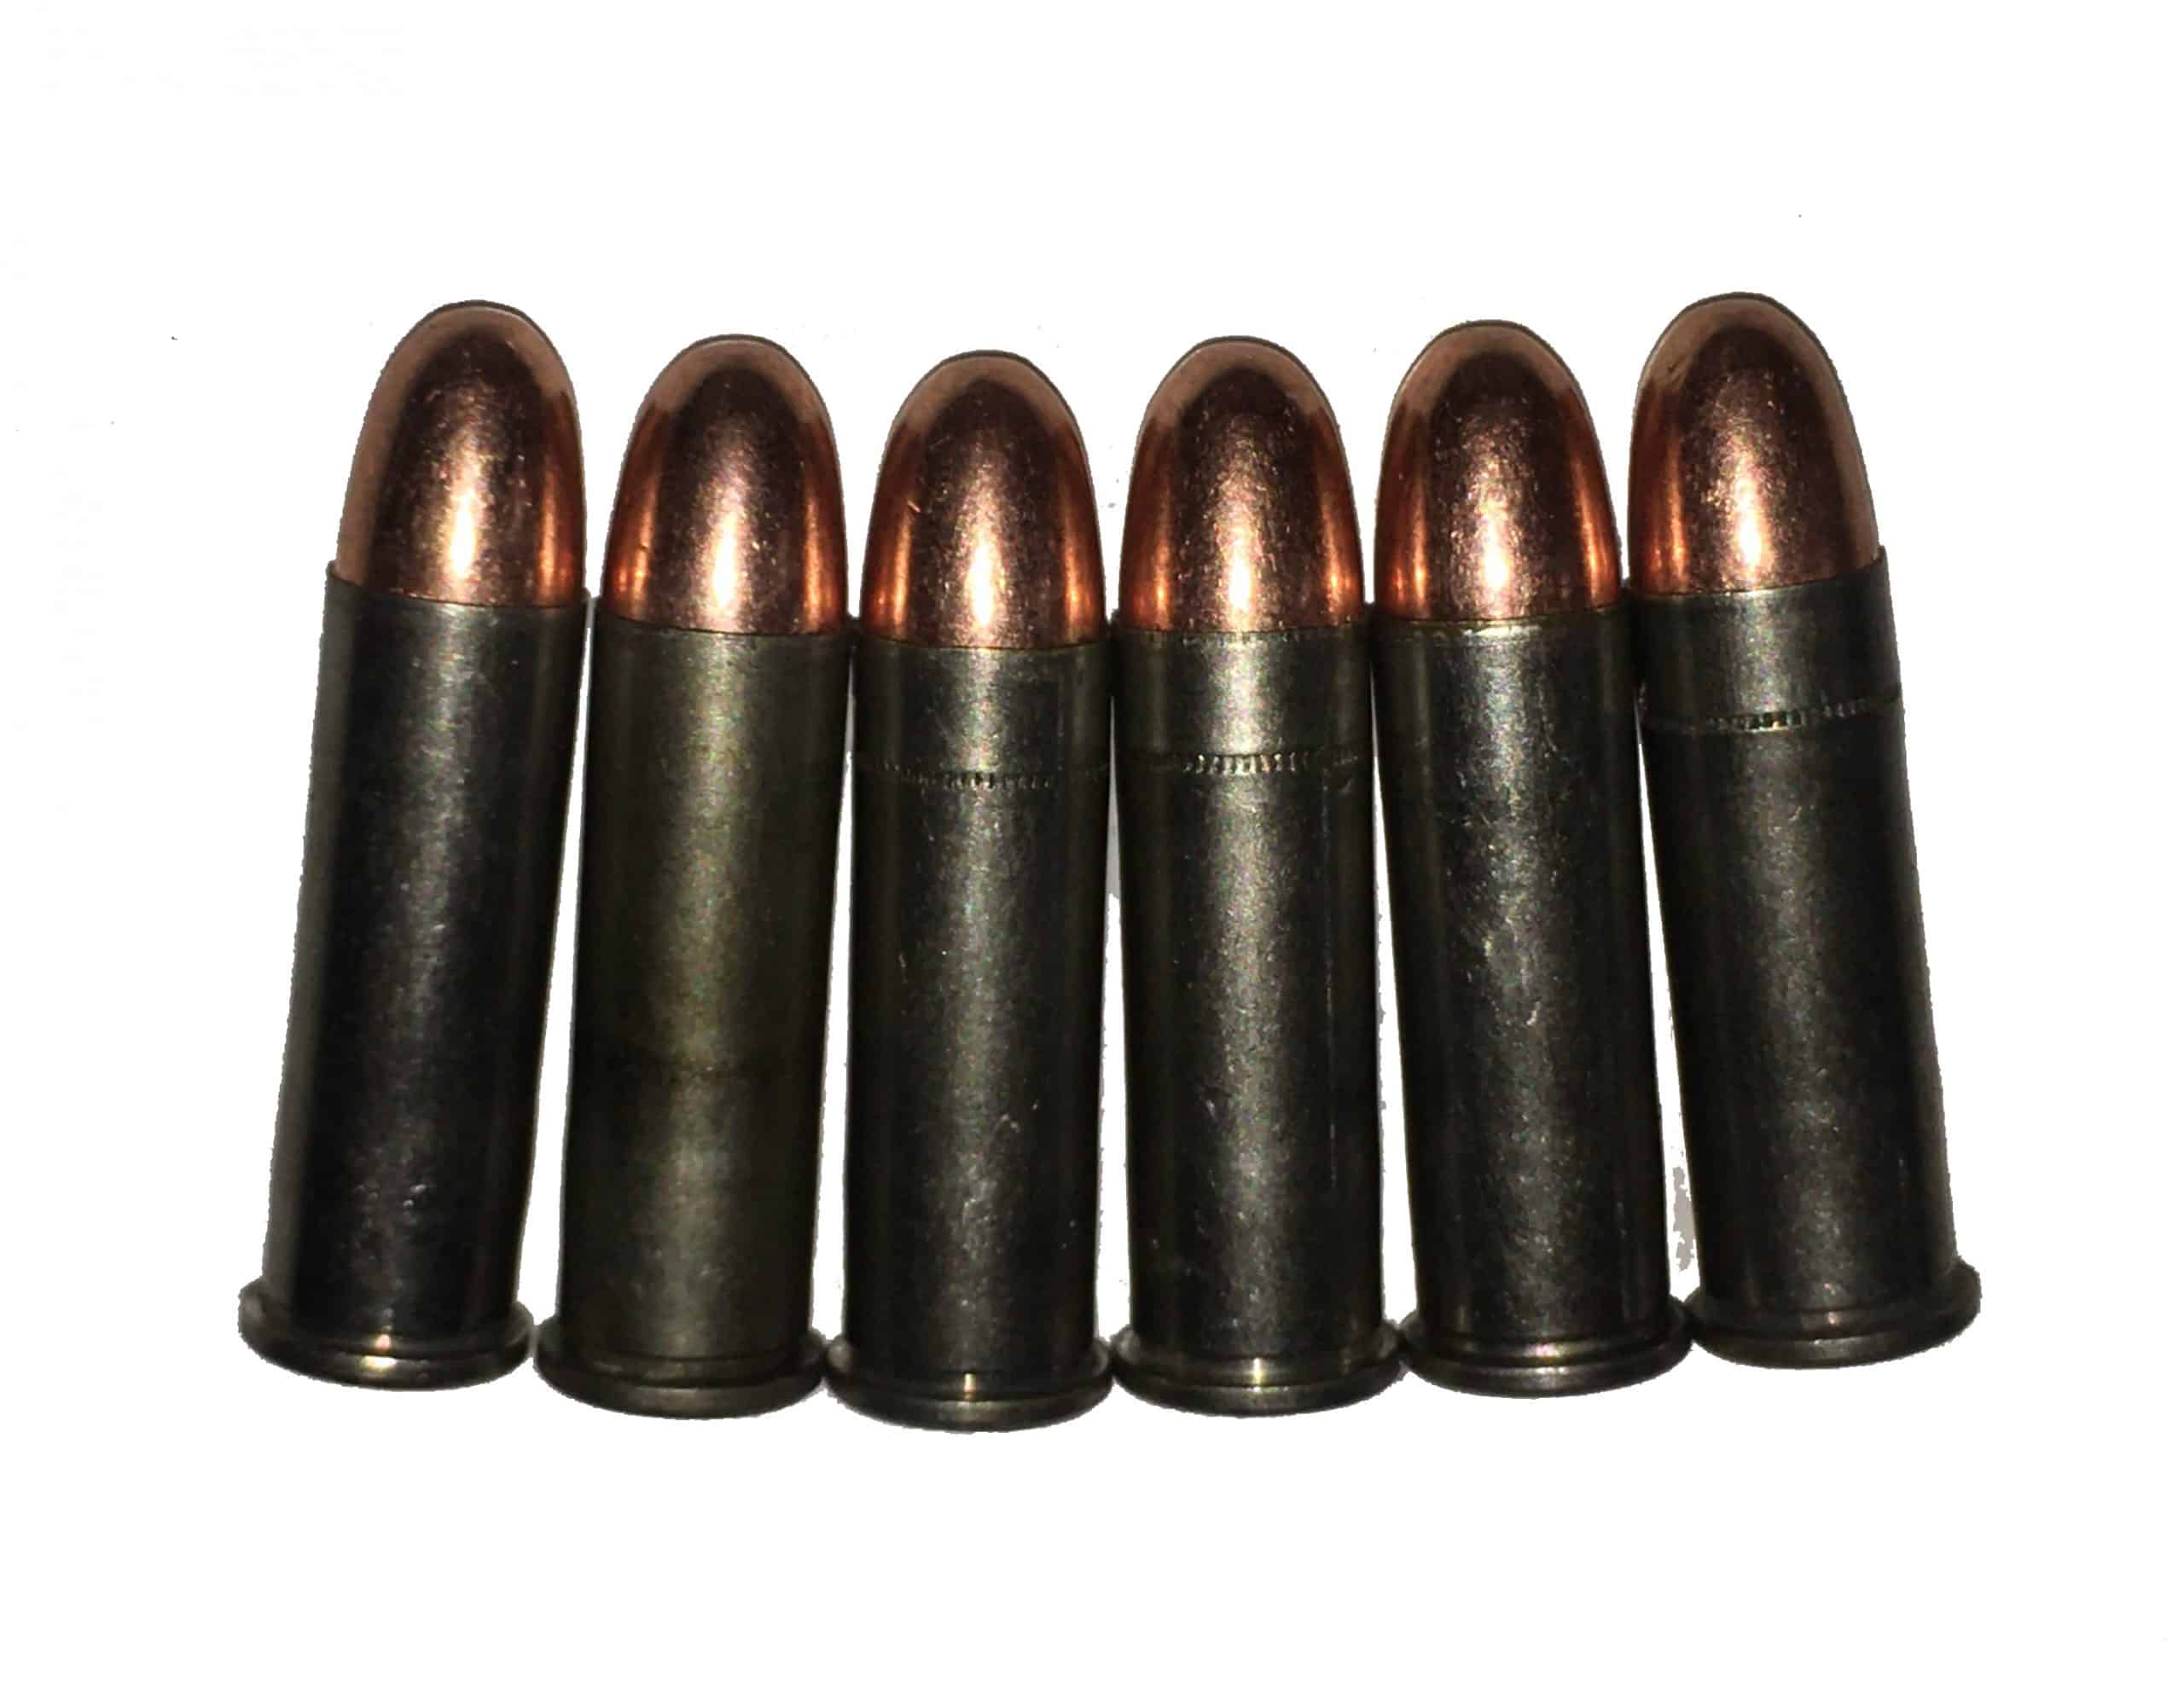 Six .357 magnum dummy rounds